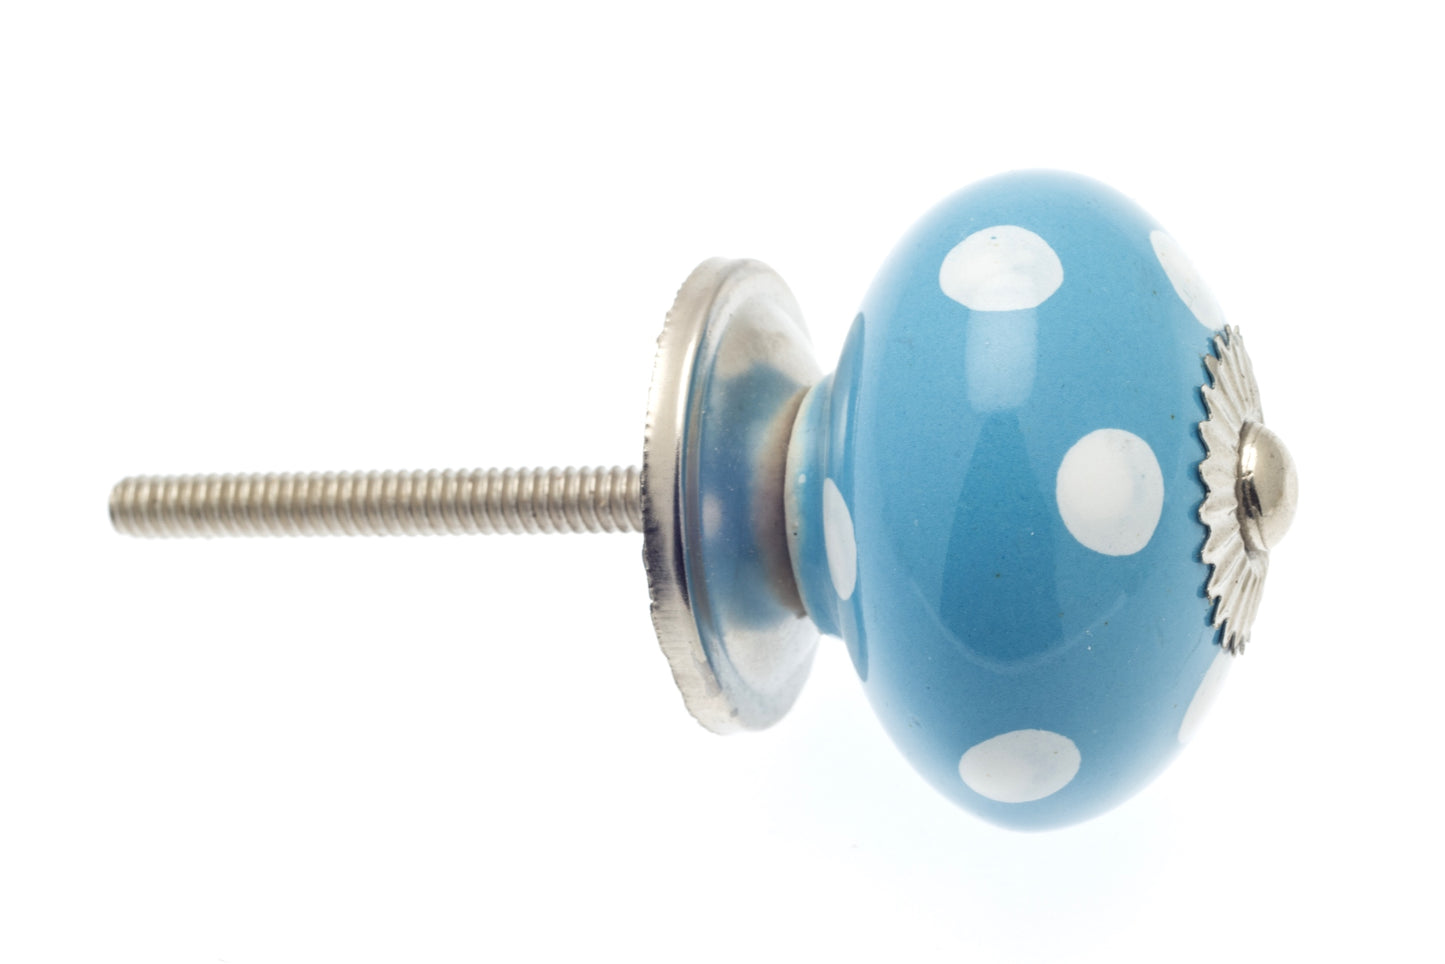 Round Ceramic Knob Blue with White Spots / Polka Dots 40mm